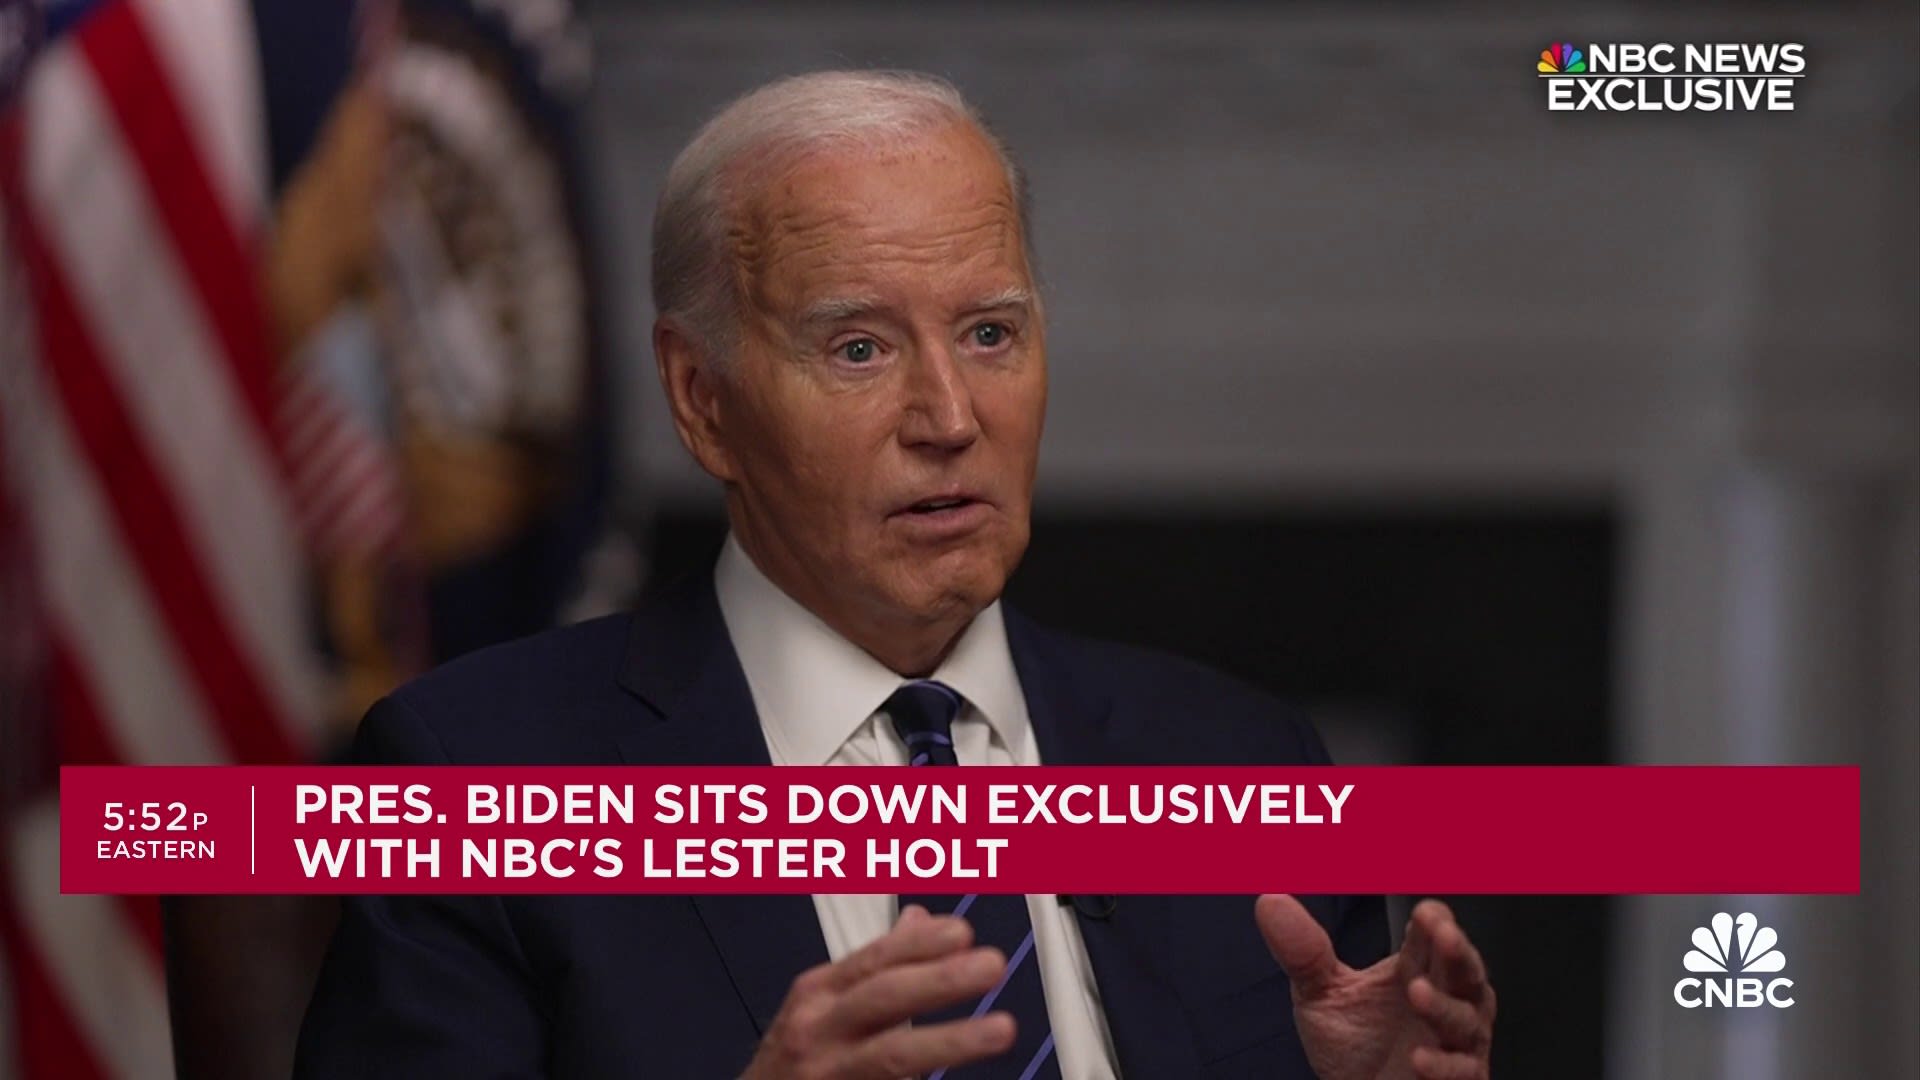 President Joe Biden: I'm not engaged in violent rhetoric, my opponent is